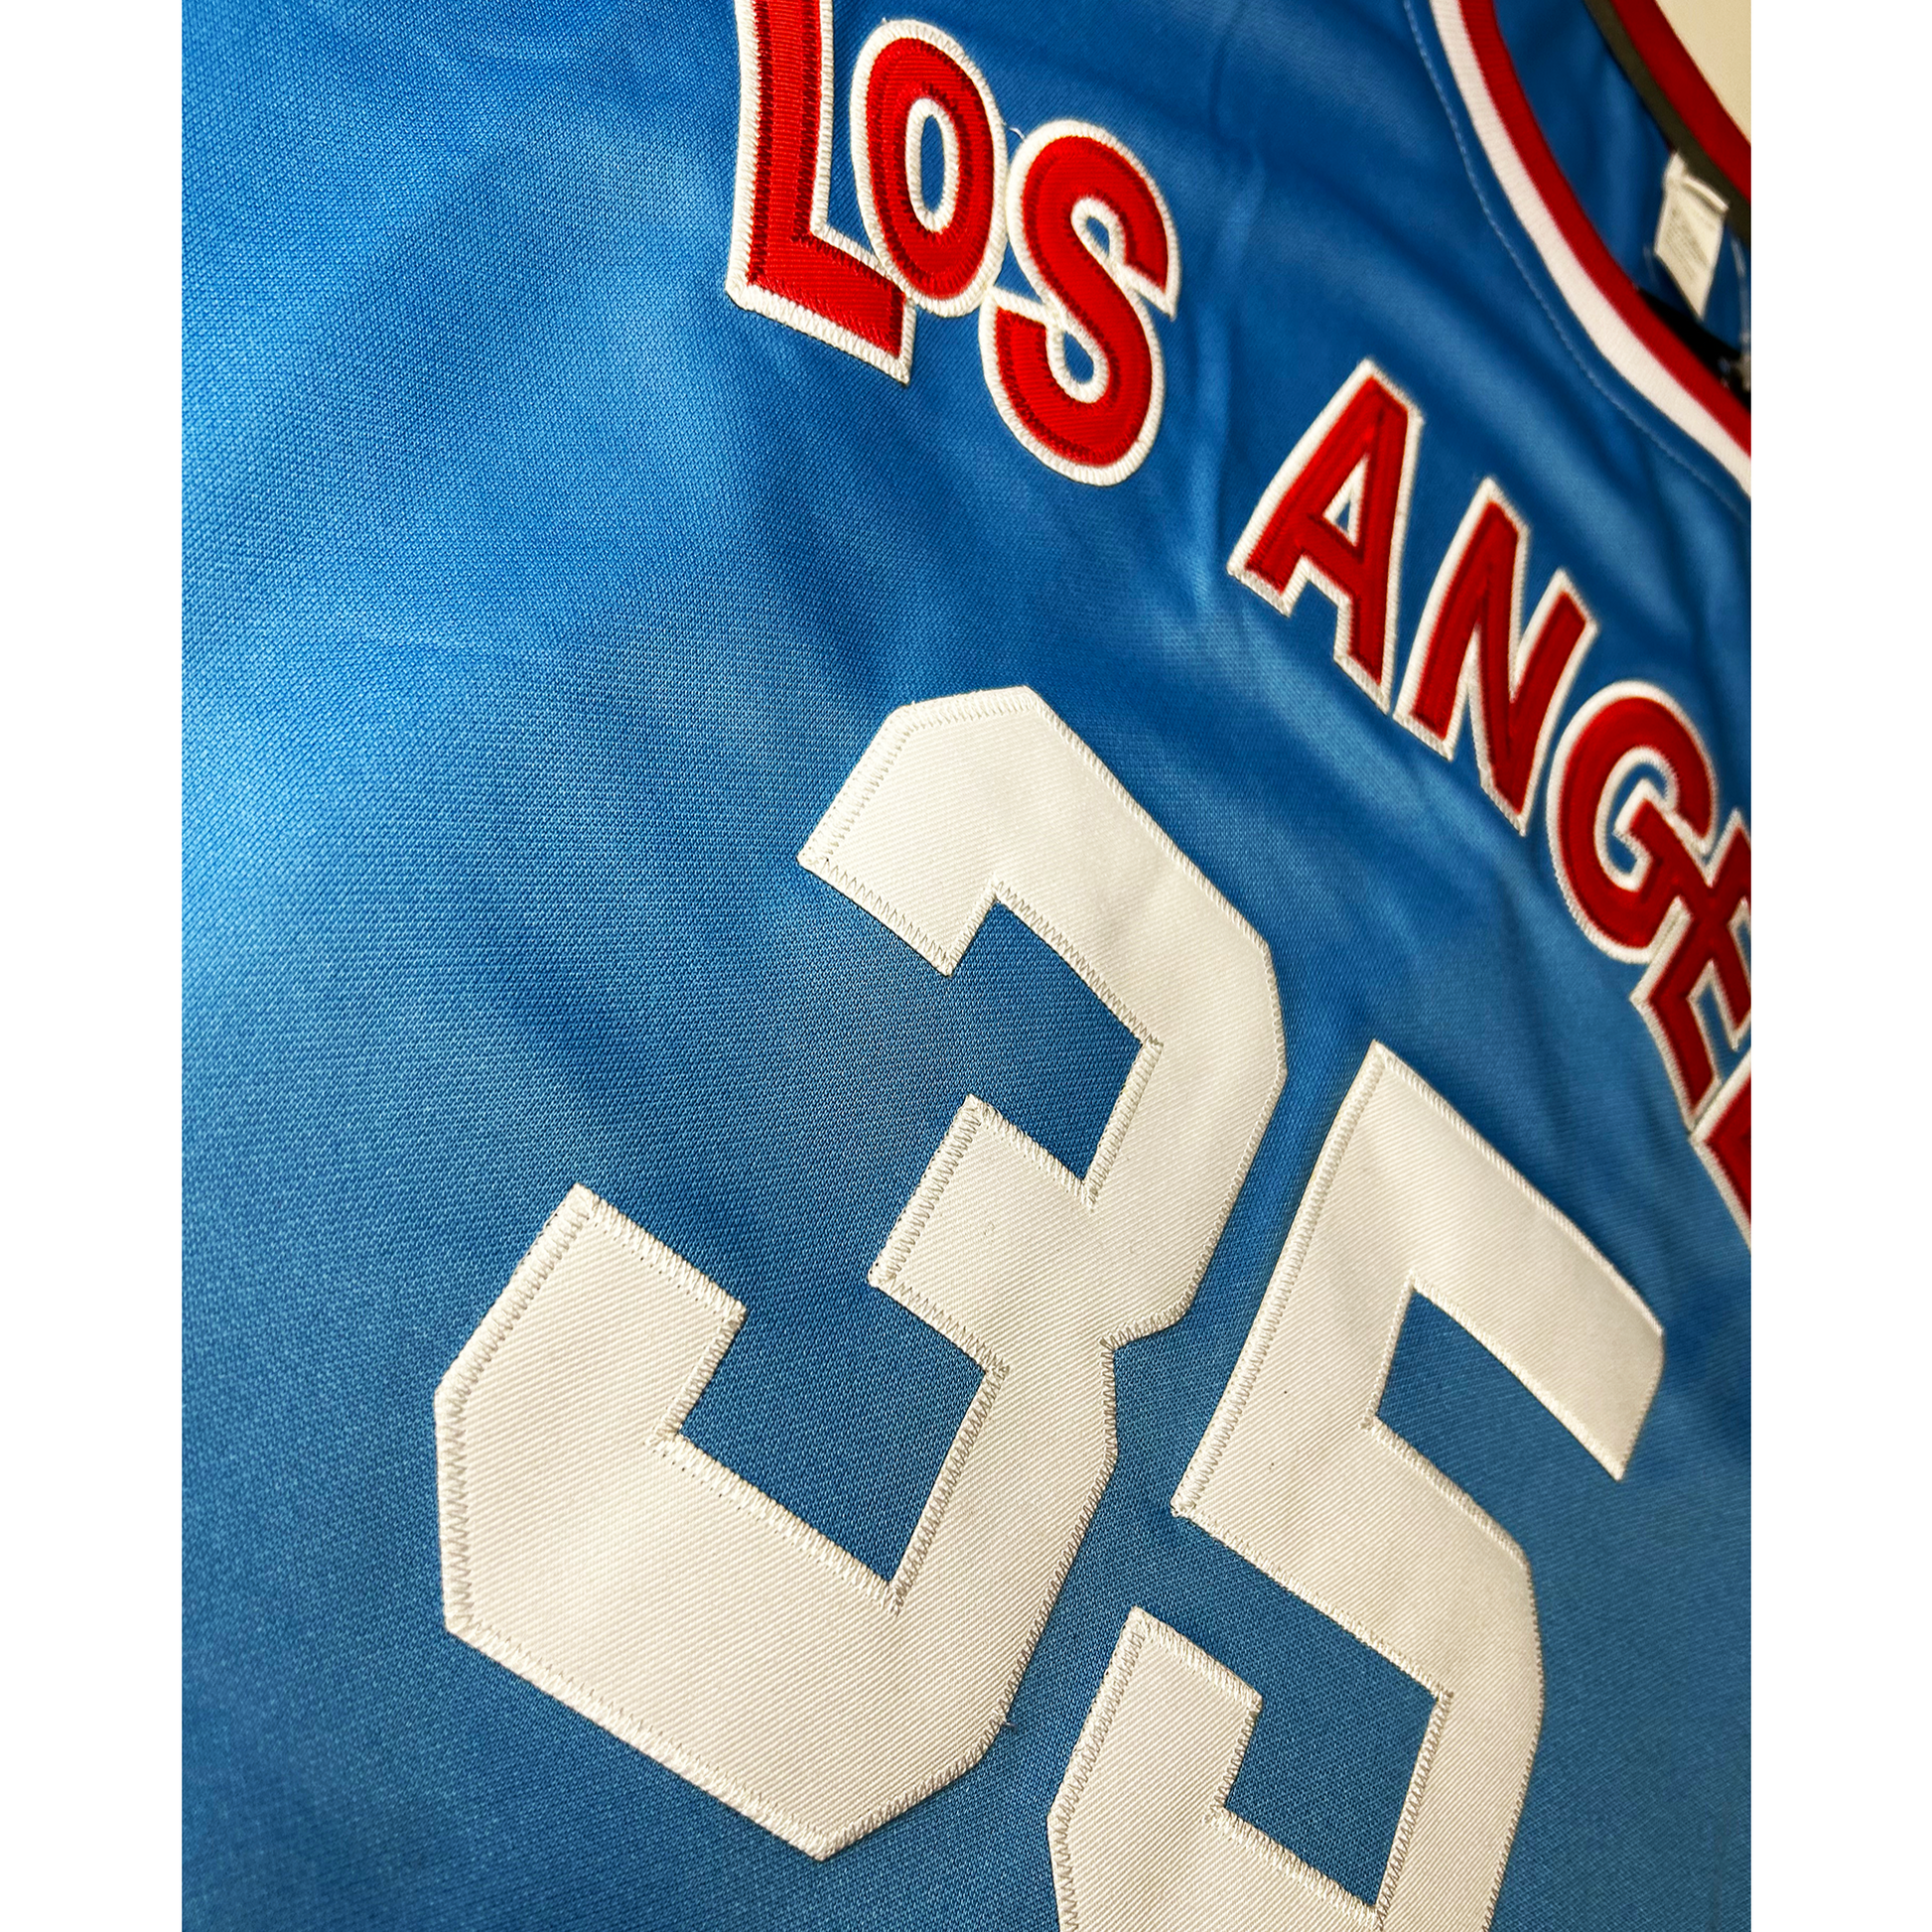 Los Angeles Stars ABA Jersey - Blue - Large - Royal Retros